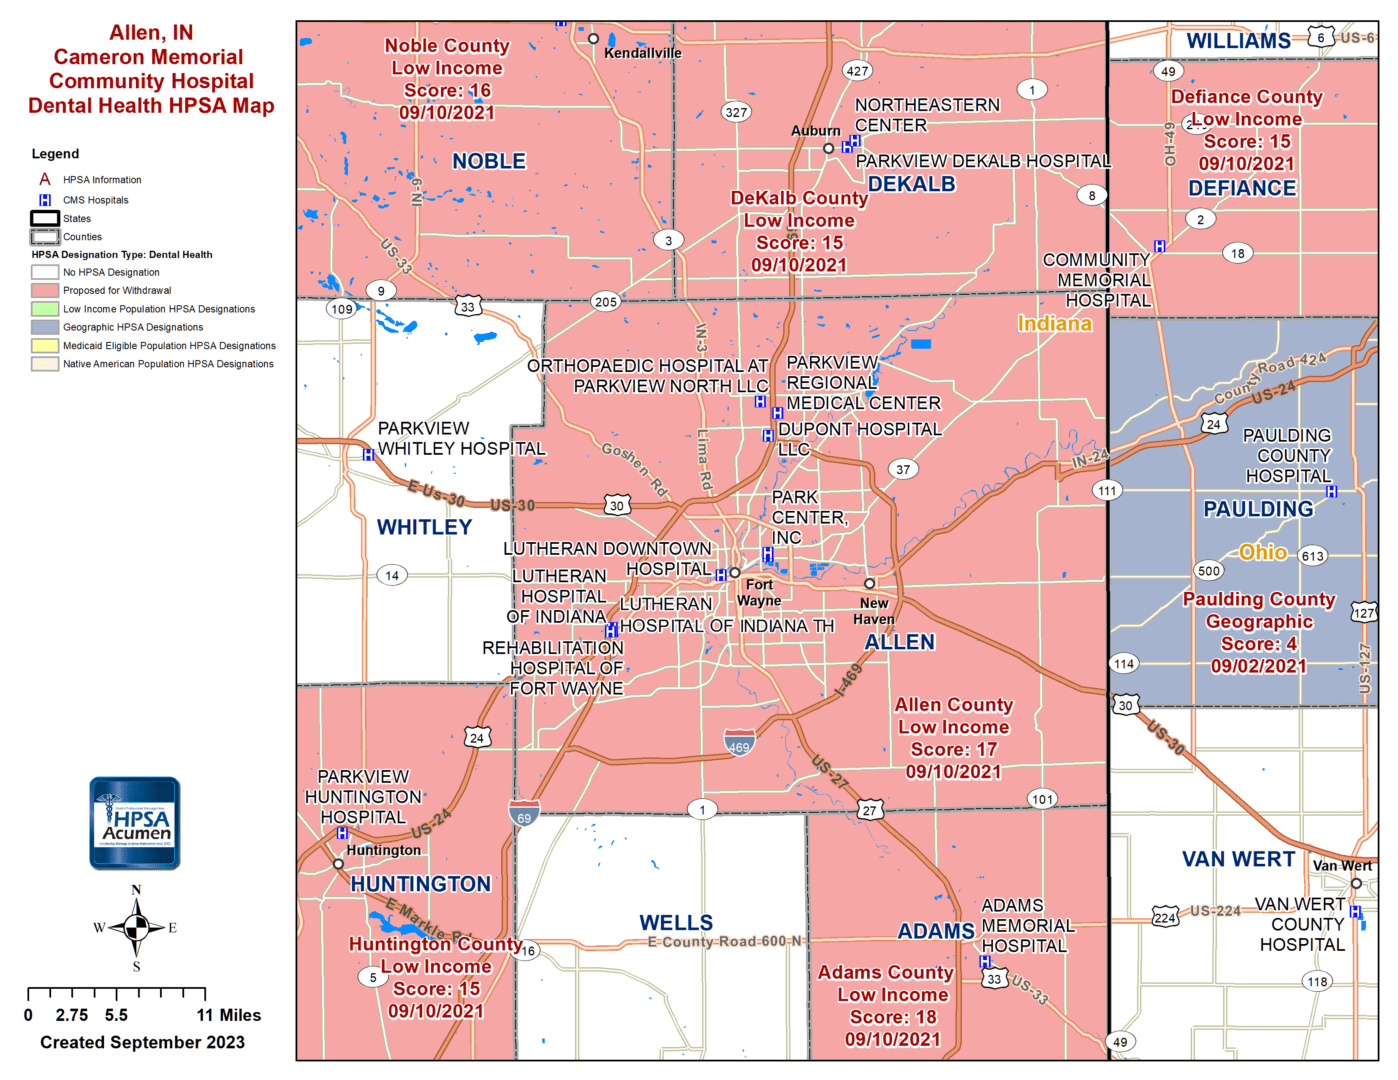 Allen, IN DH HPSA Map